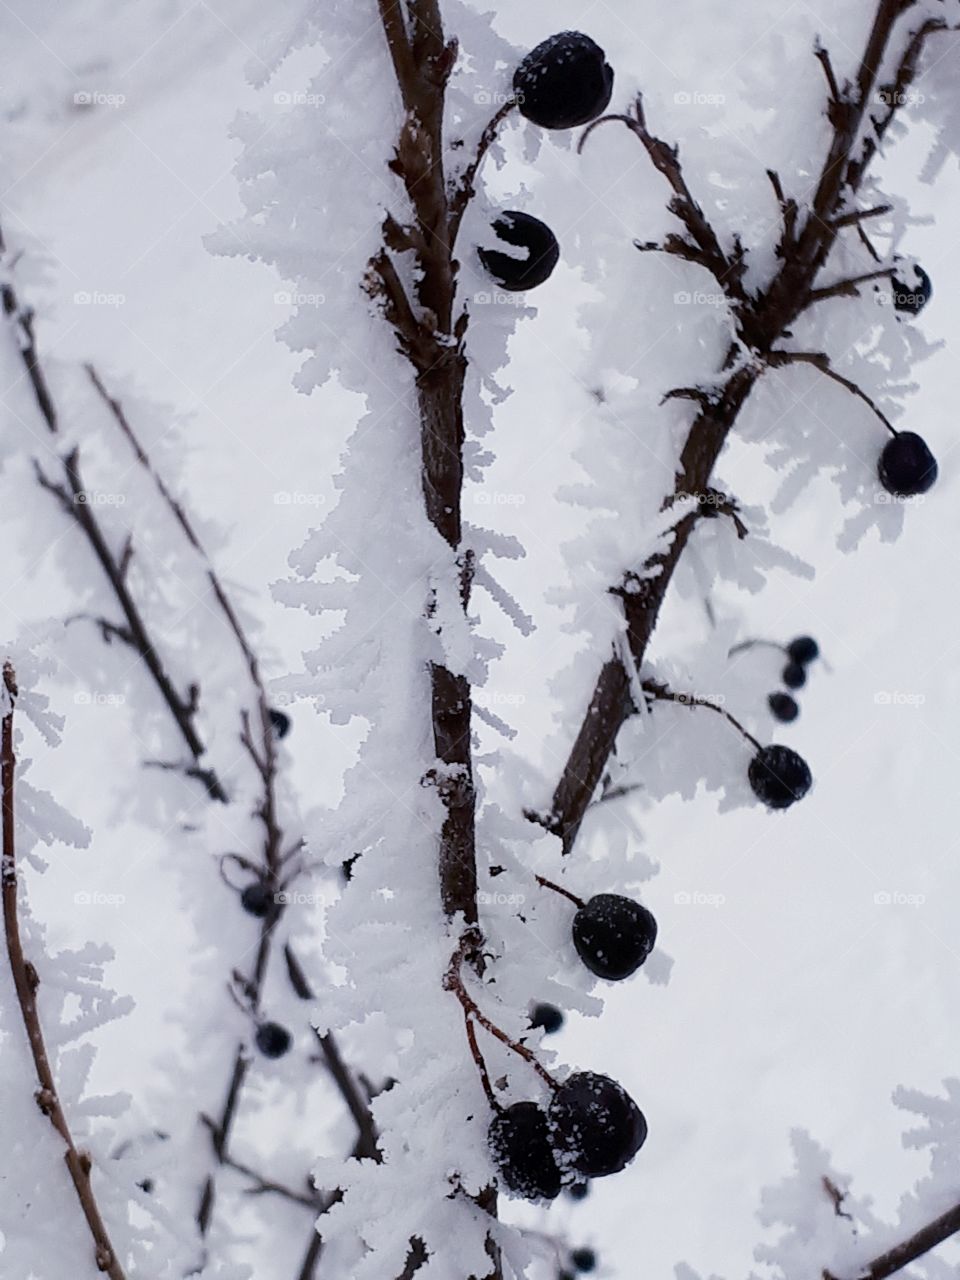 Shrub with black fruits under snow